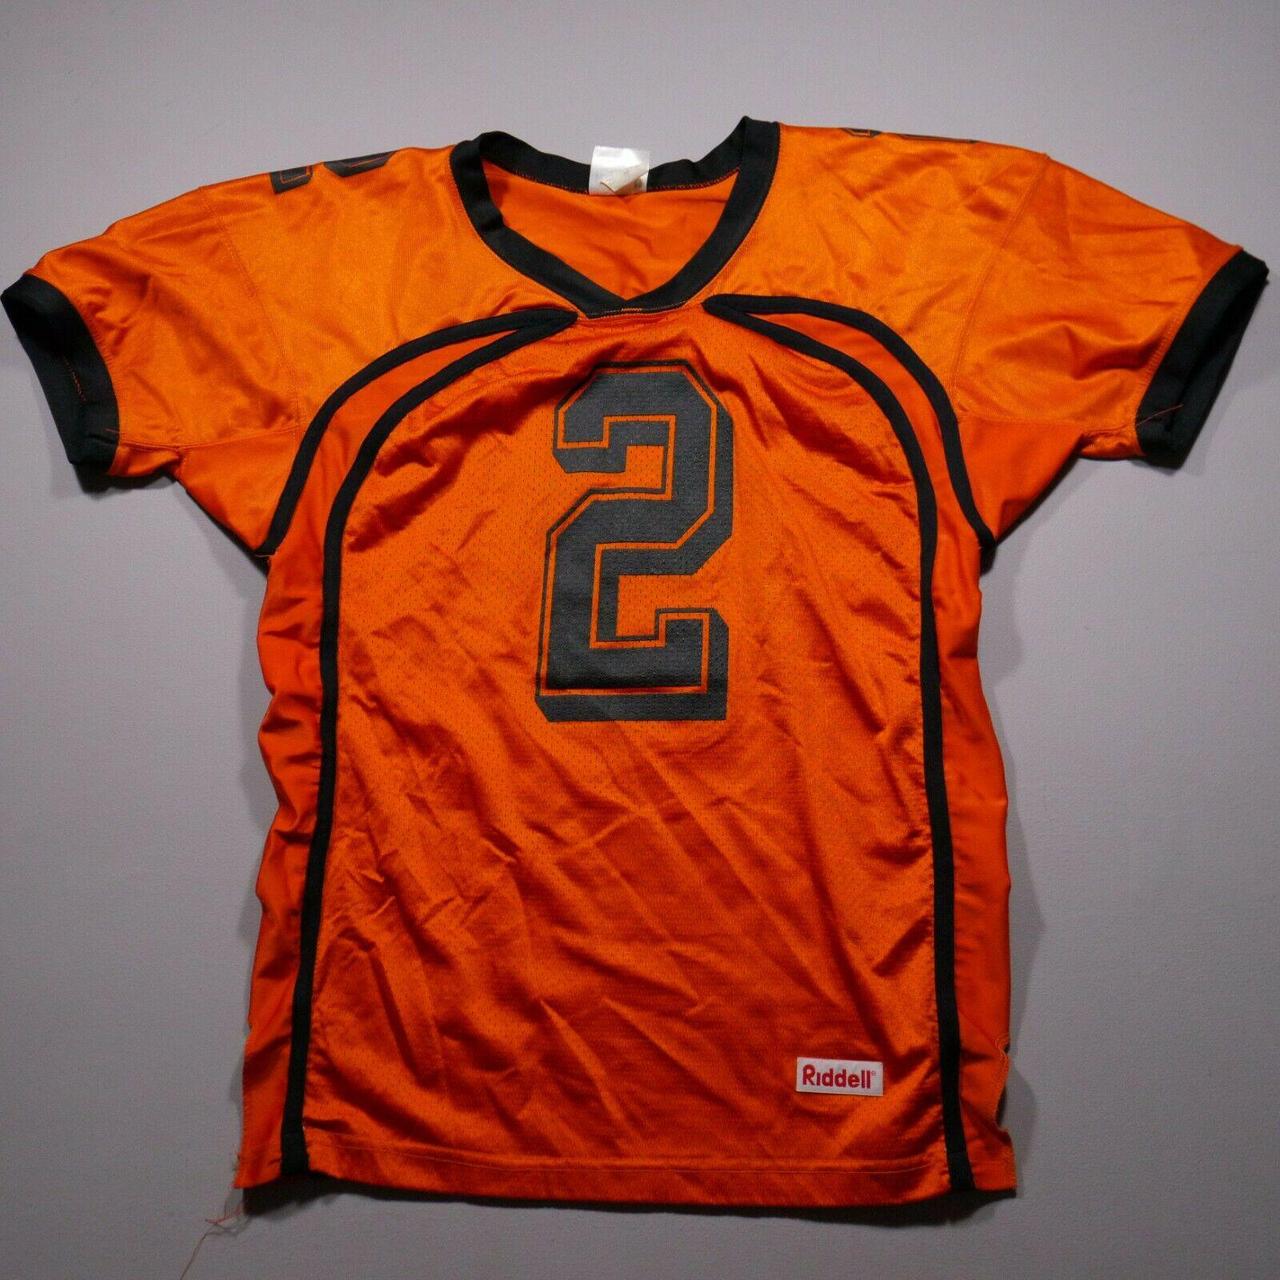 Product Image 1 - Vintage Riddell Football Jersey Orange